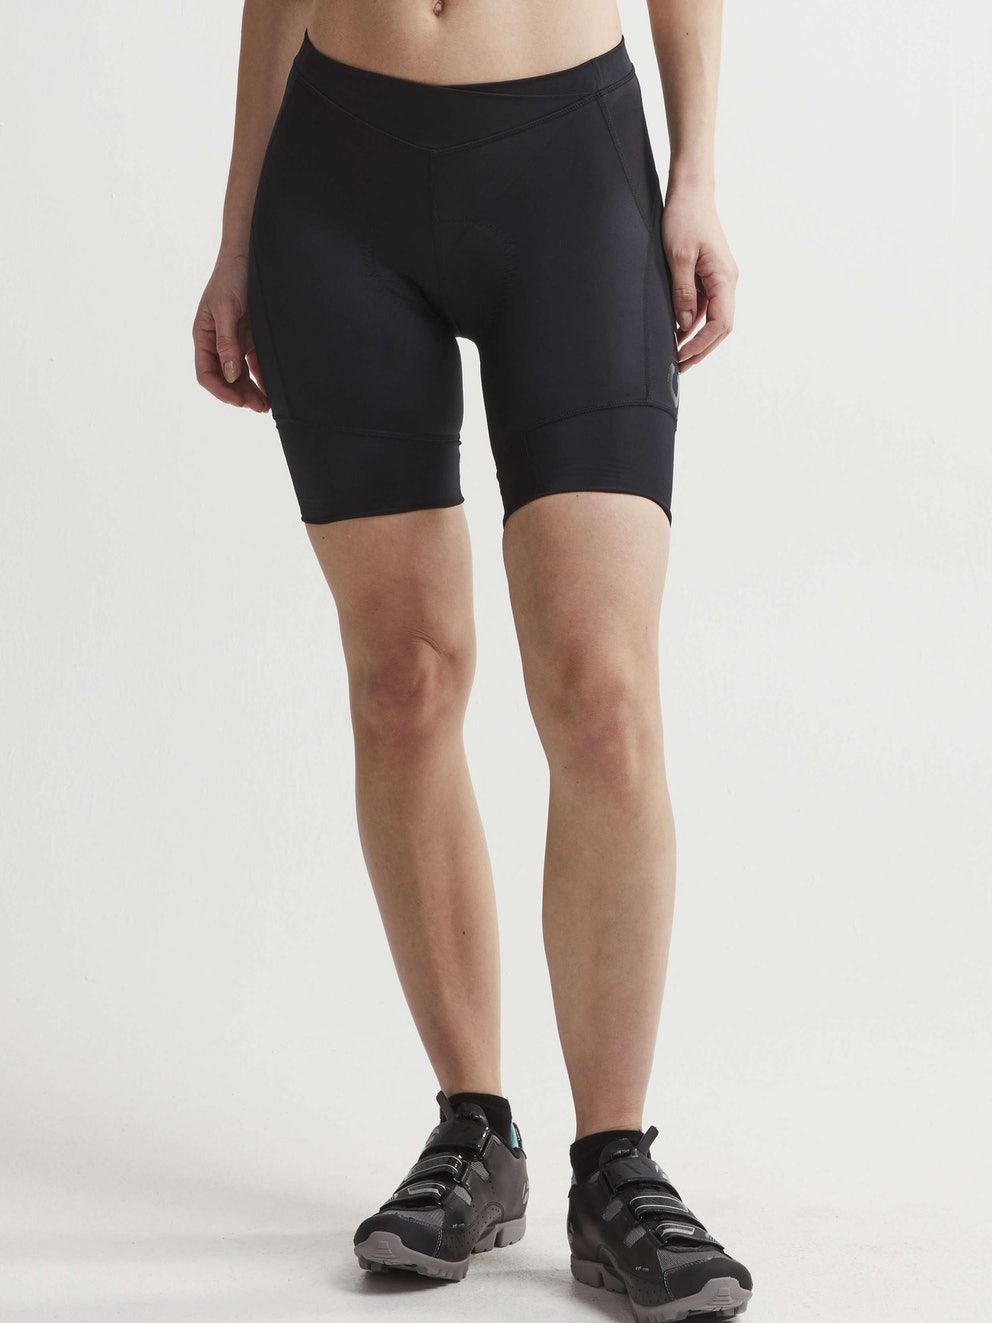 Craft Essence Shorts - Cycling shorts - Women's